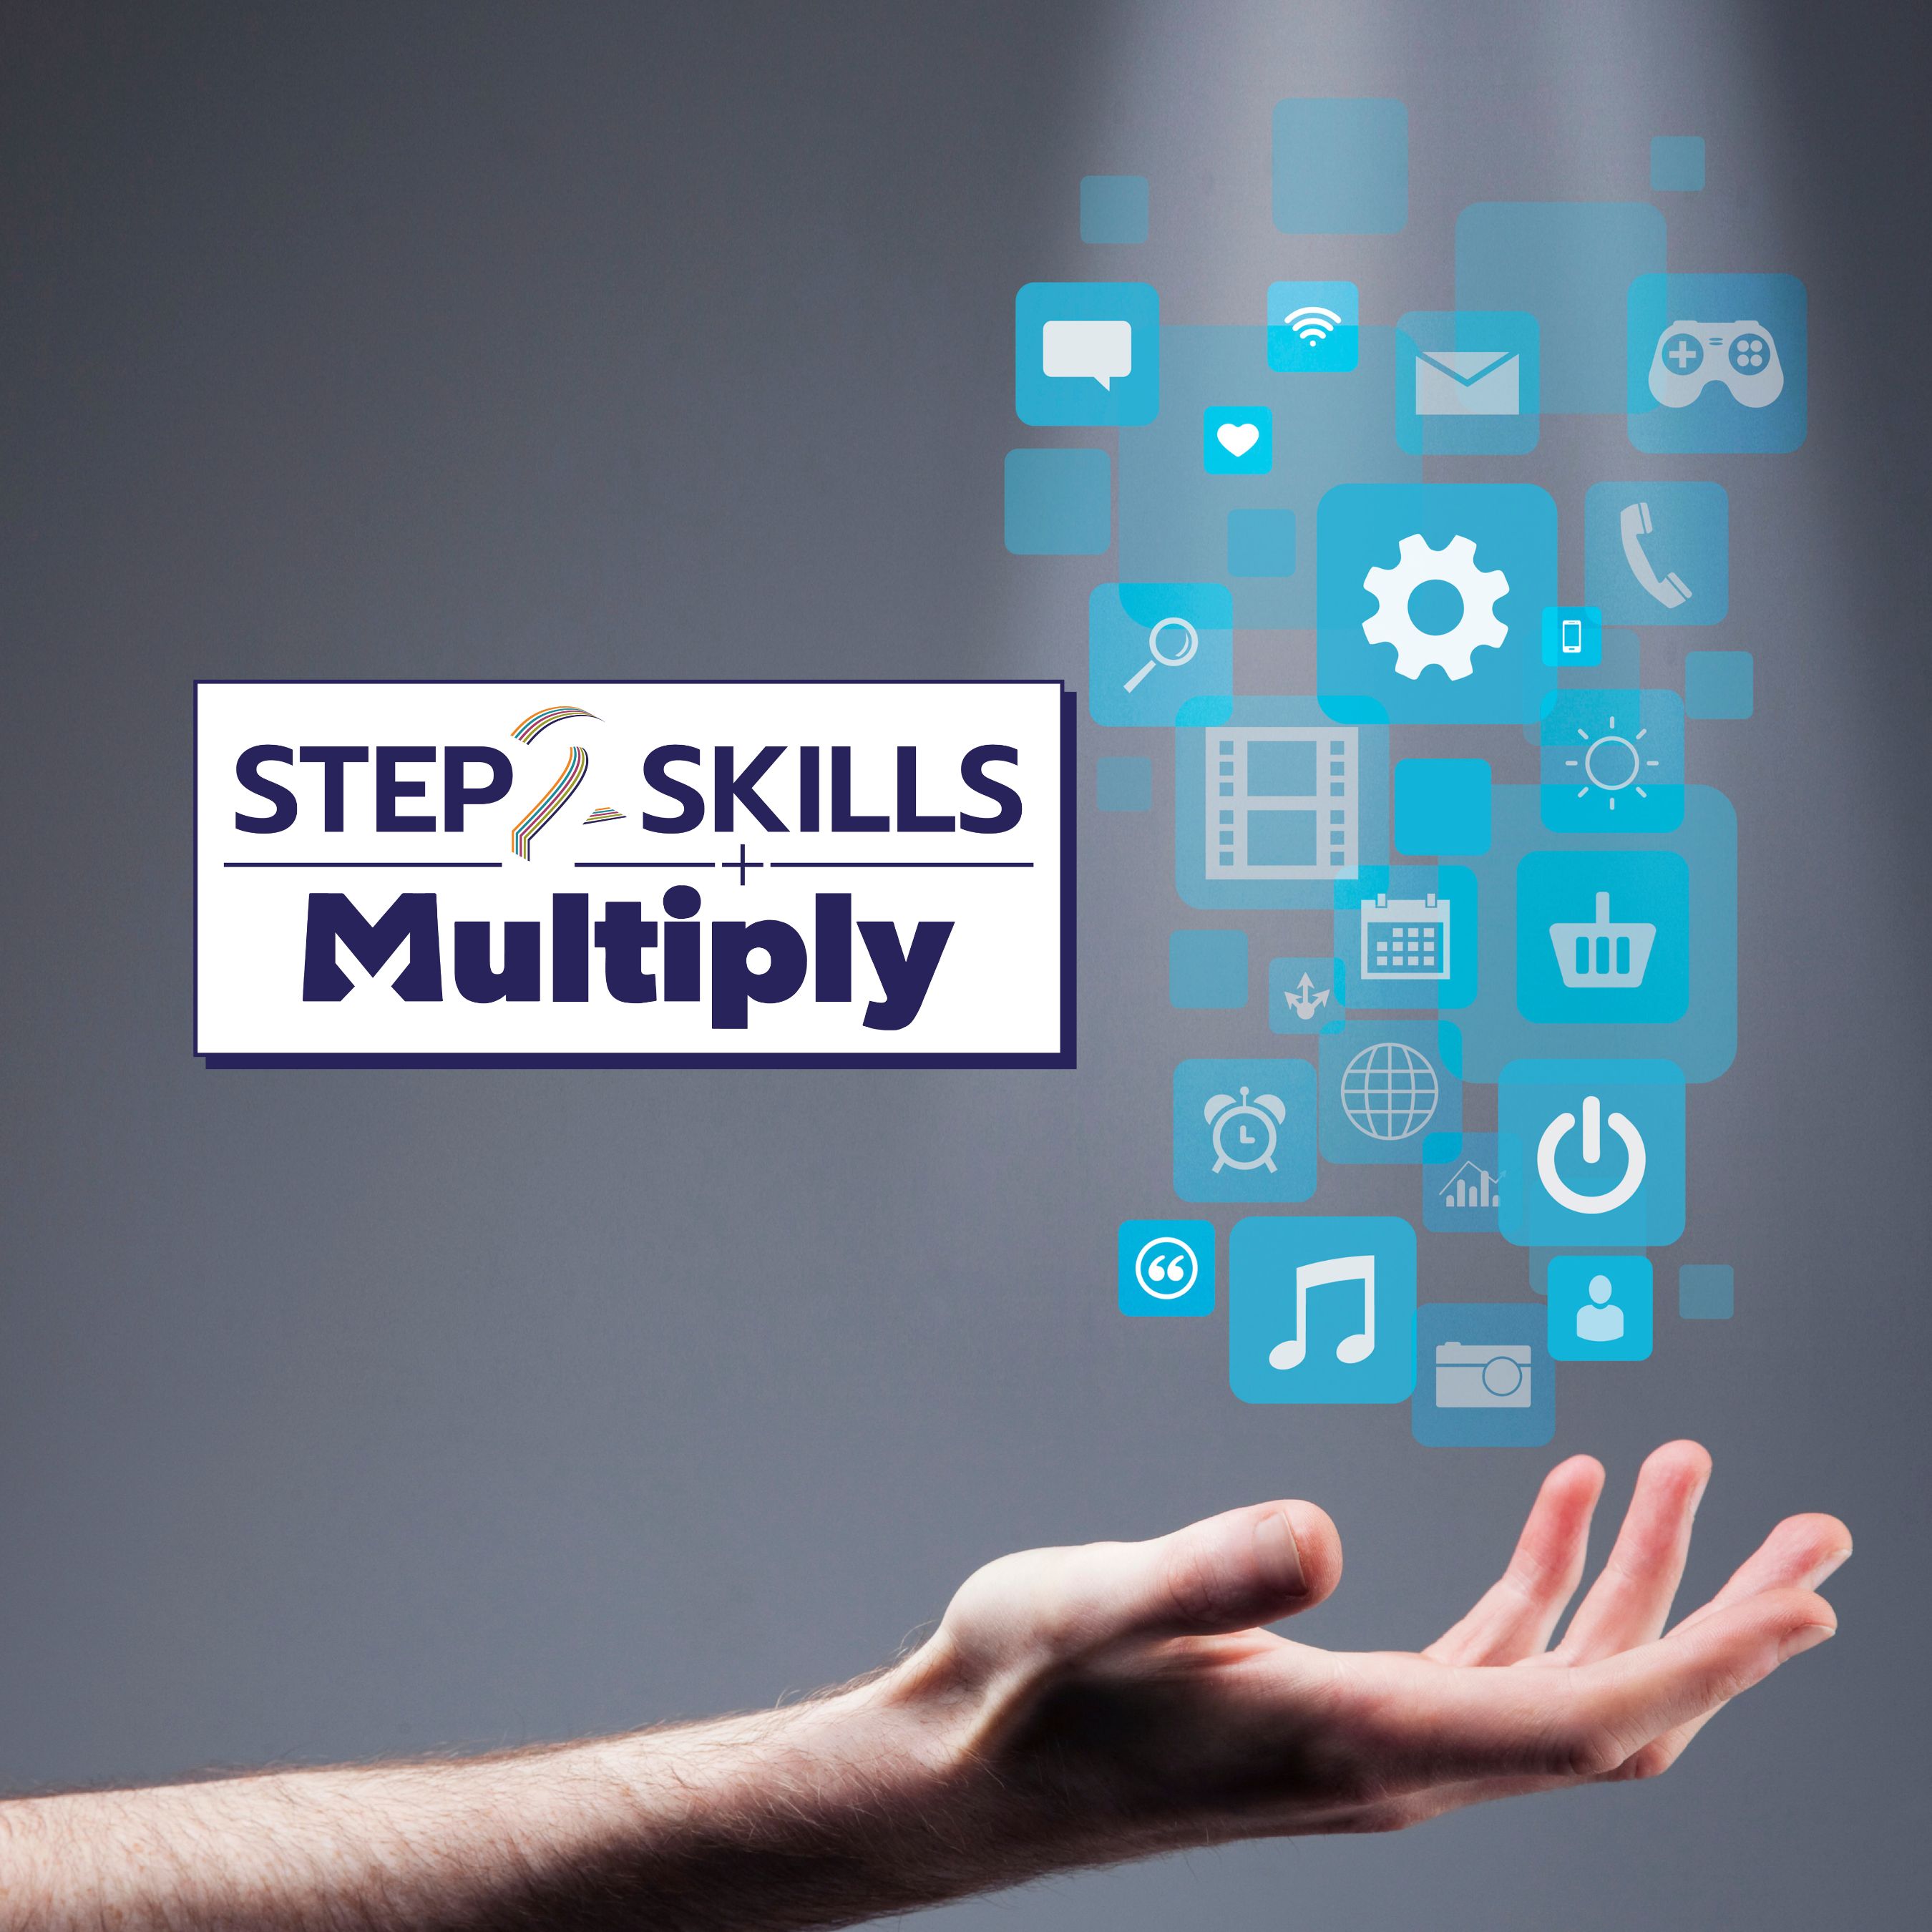 Multiply - Basic Digital Skills